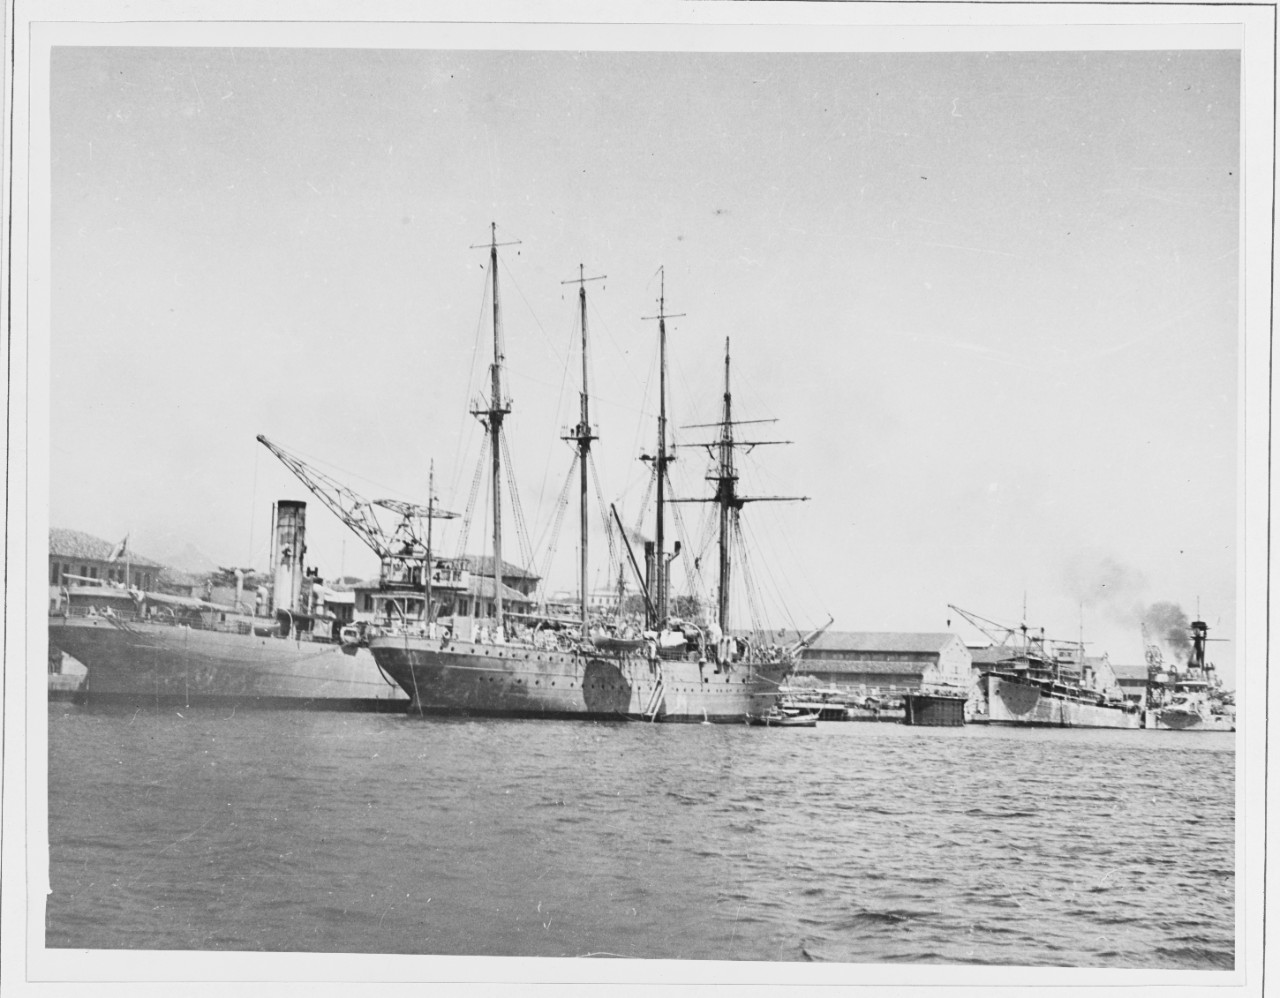 ALMIRANTE SALDANHA (Brazilian Training Ship, 1933)